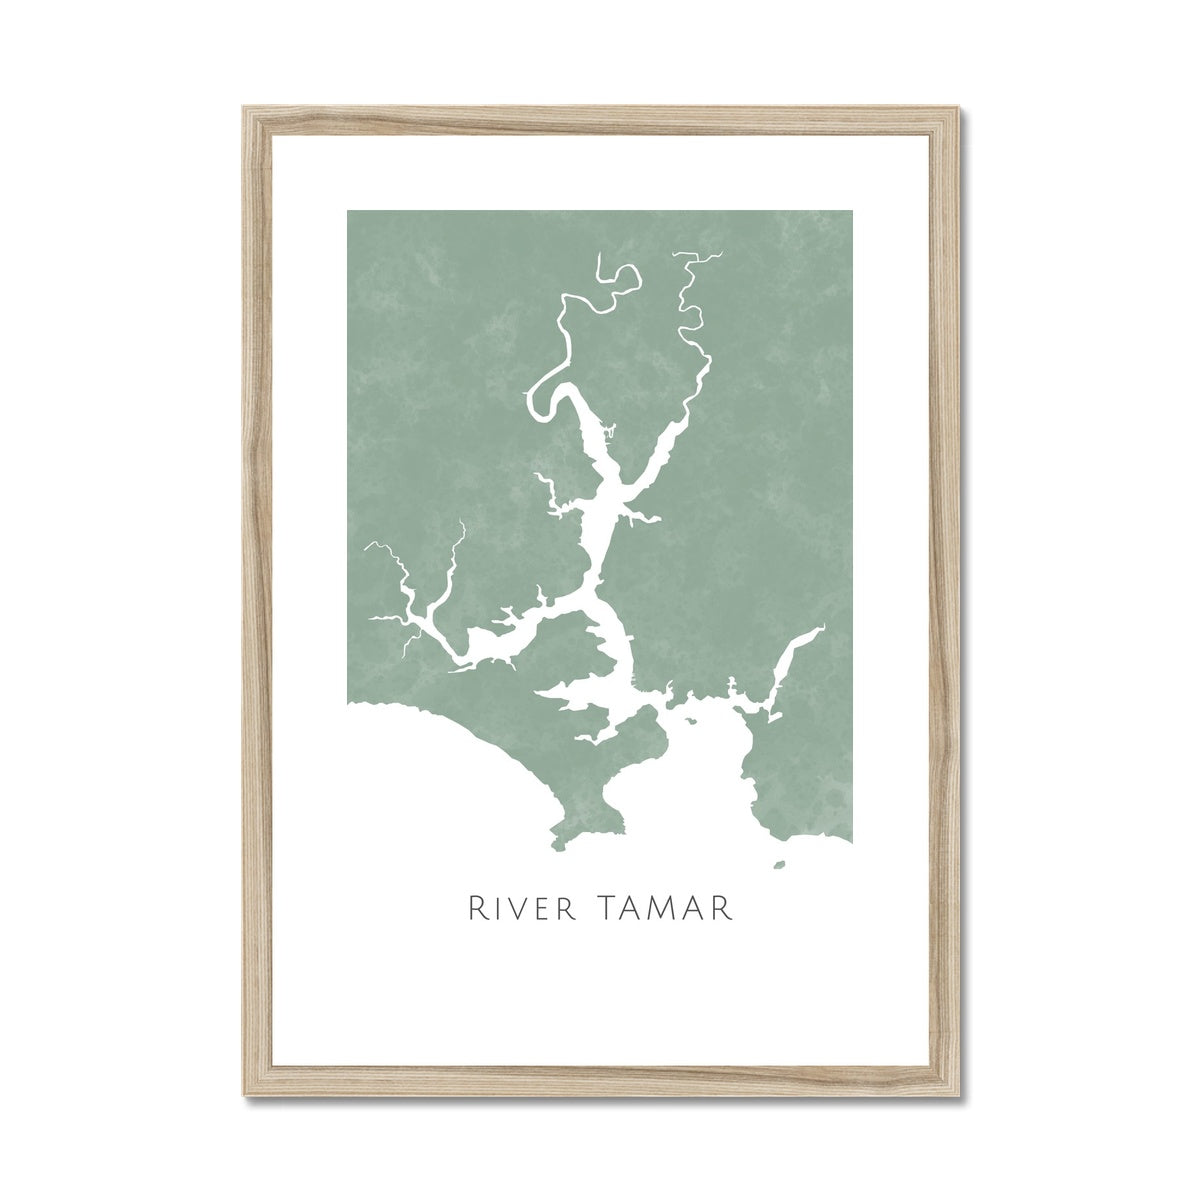 River Tamar -  Framed & Mounted Map